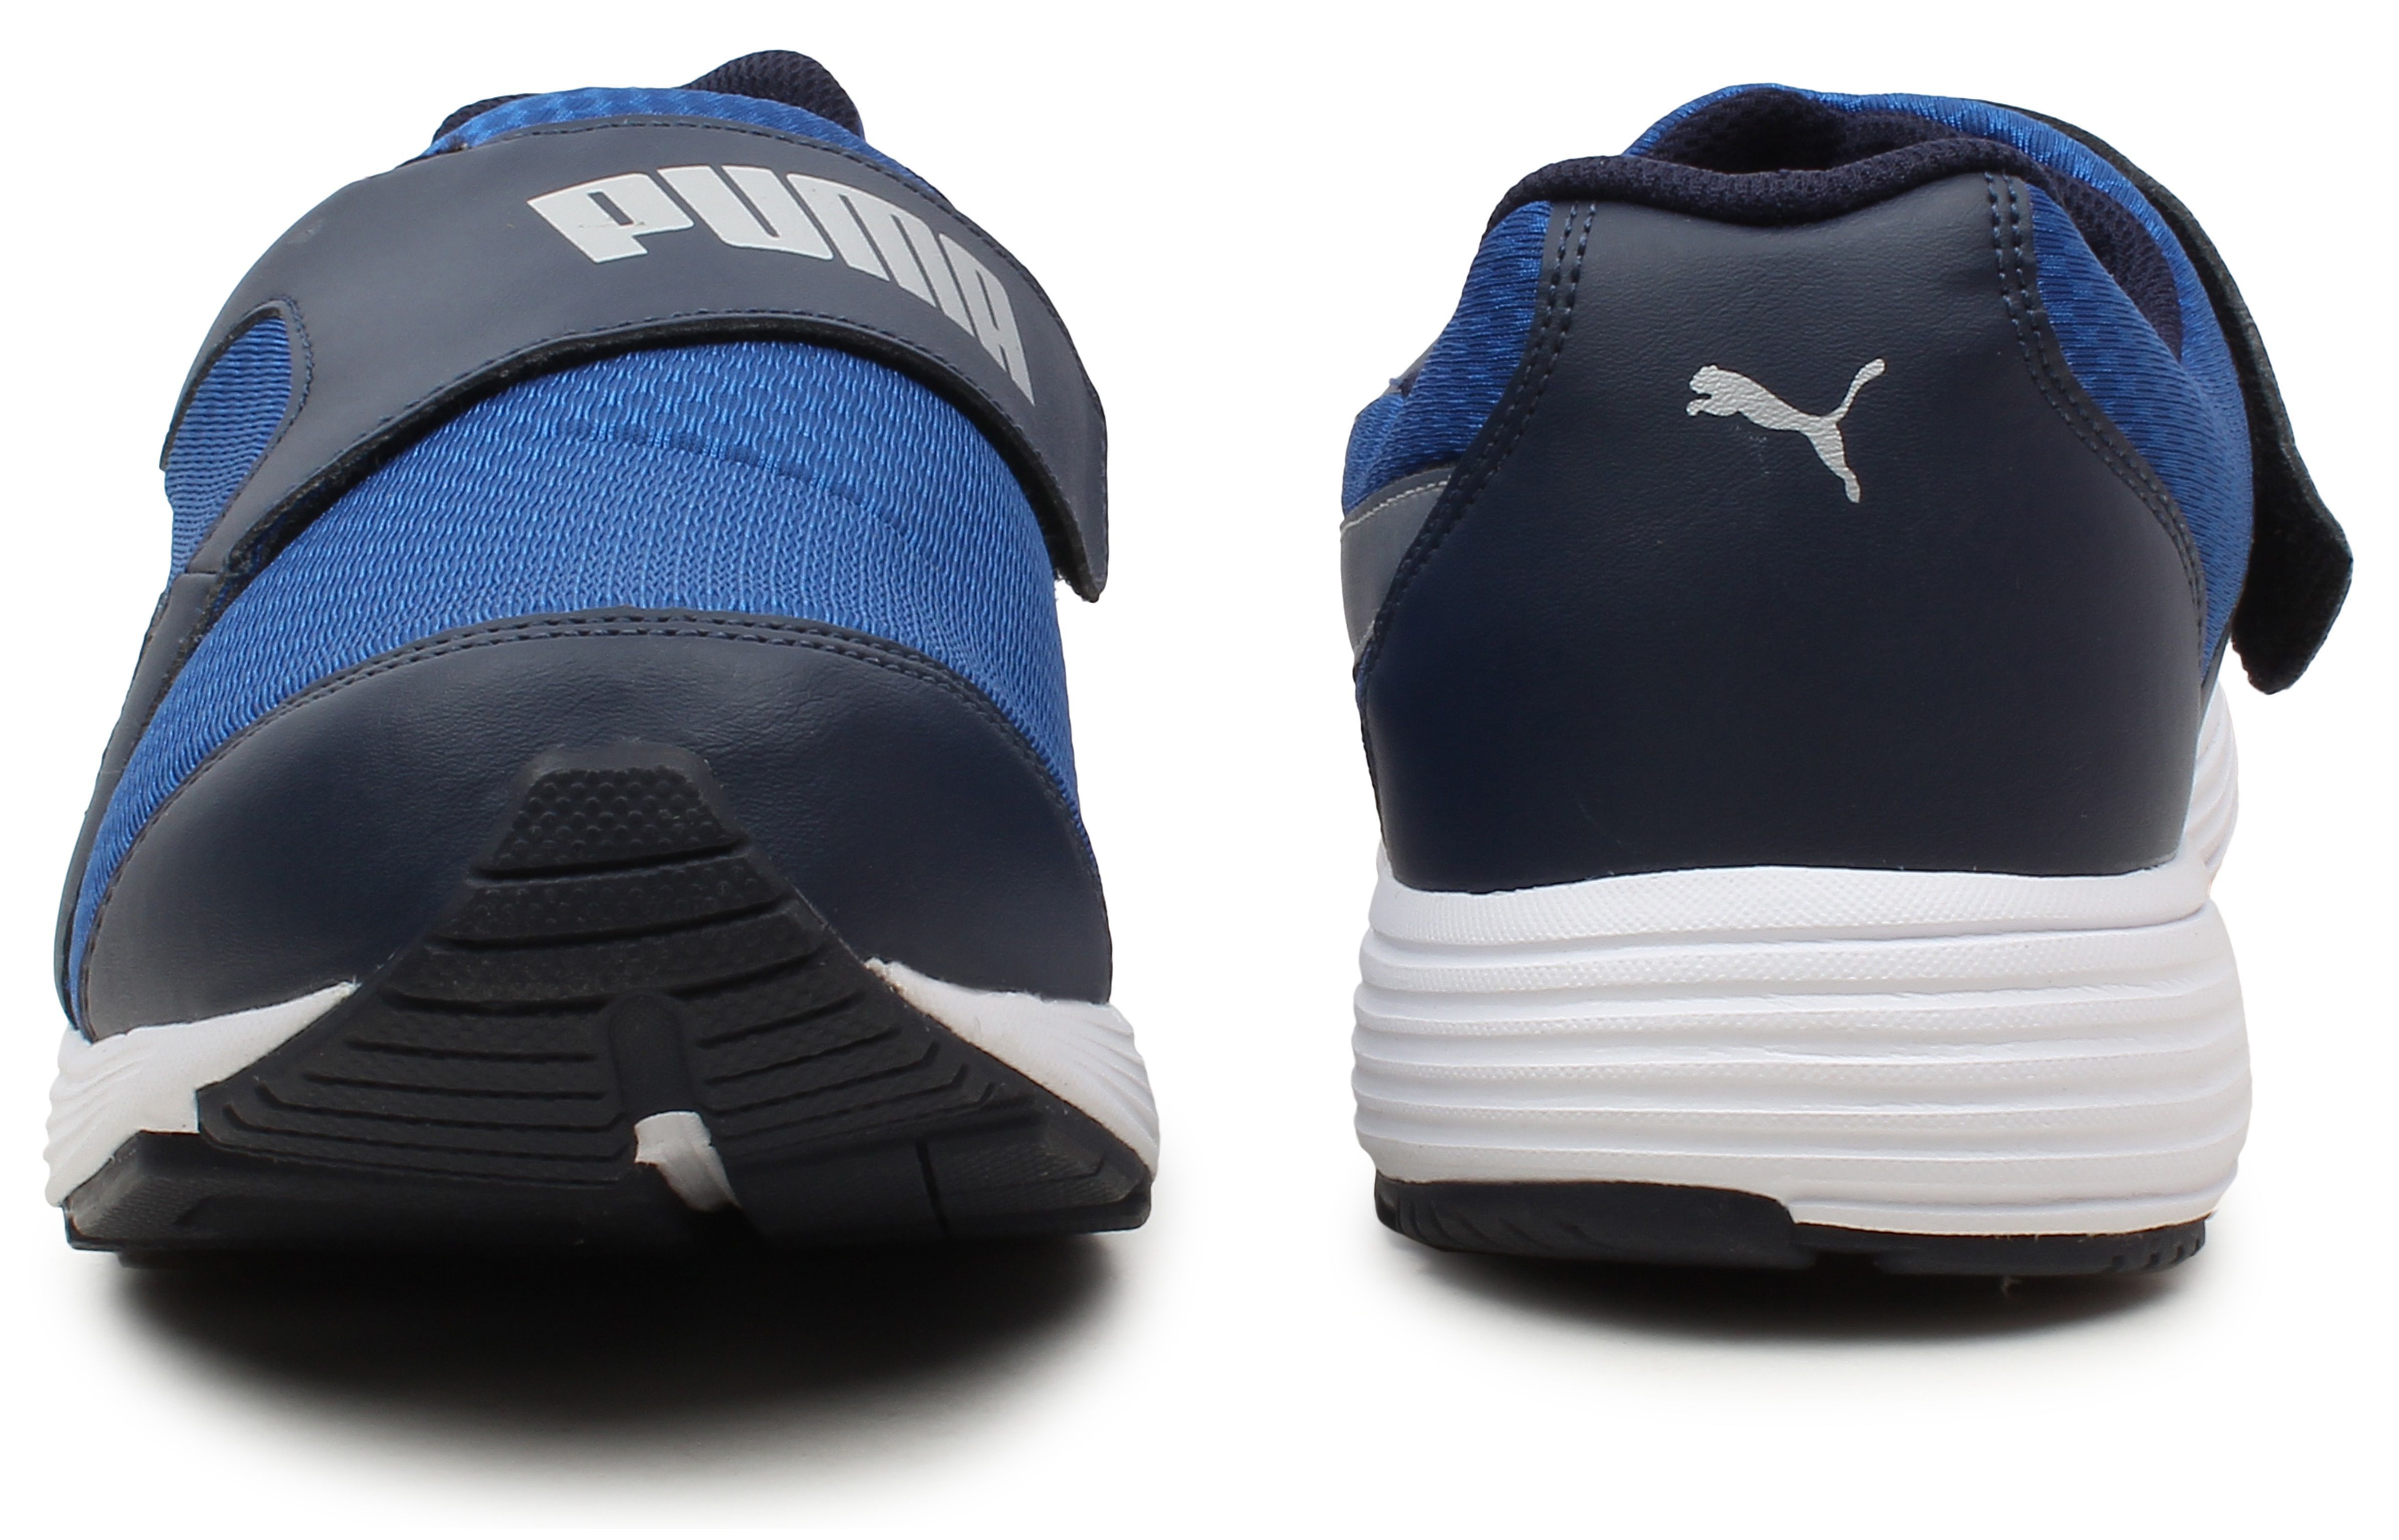 Puma Reef Slip-On IDP Blue Running Shoes - Buy Puma Reef Slip-On IDP ...